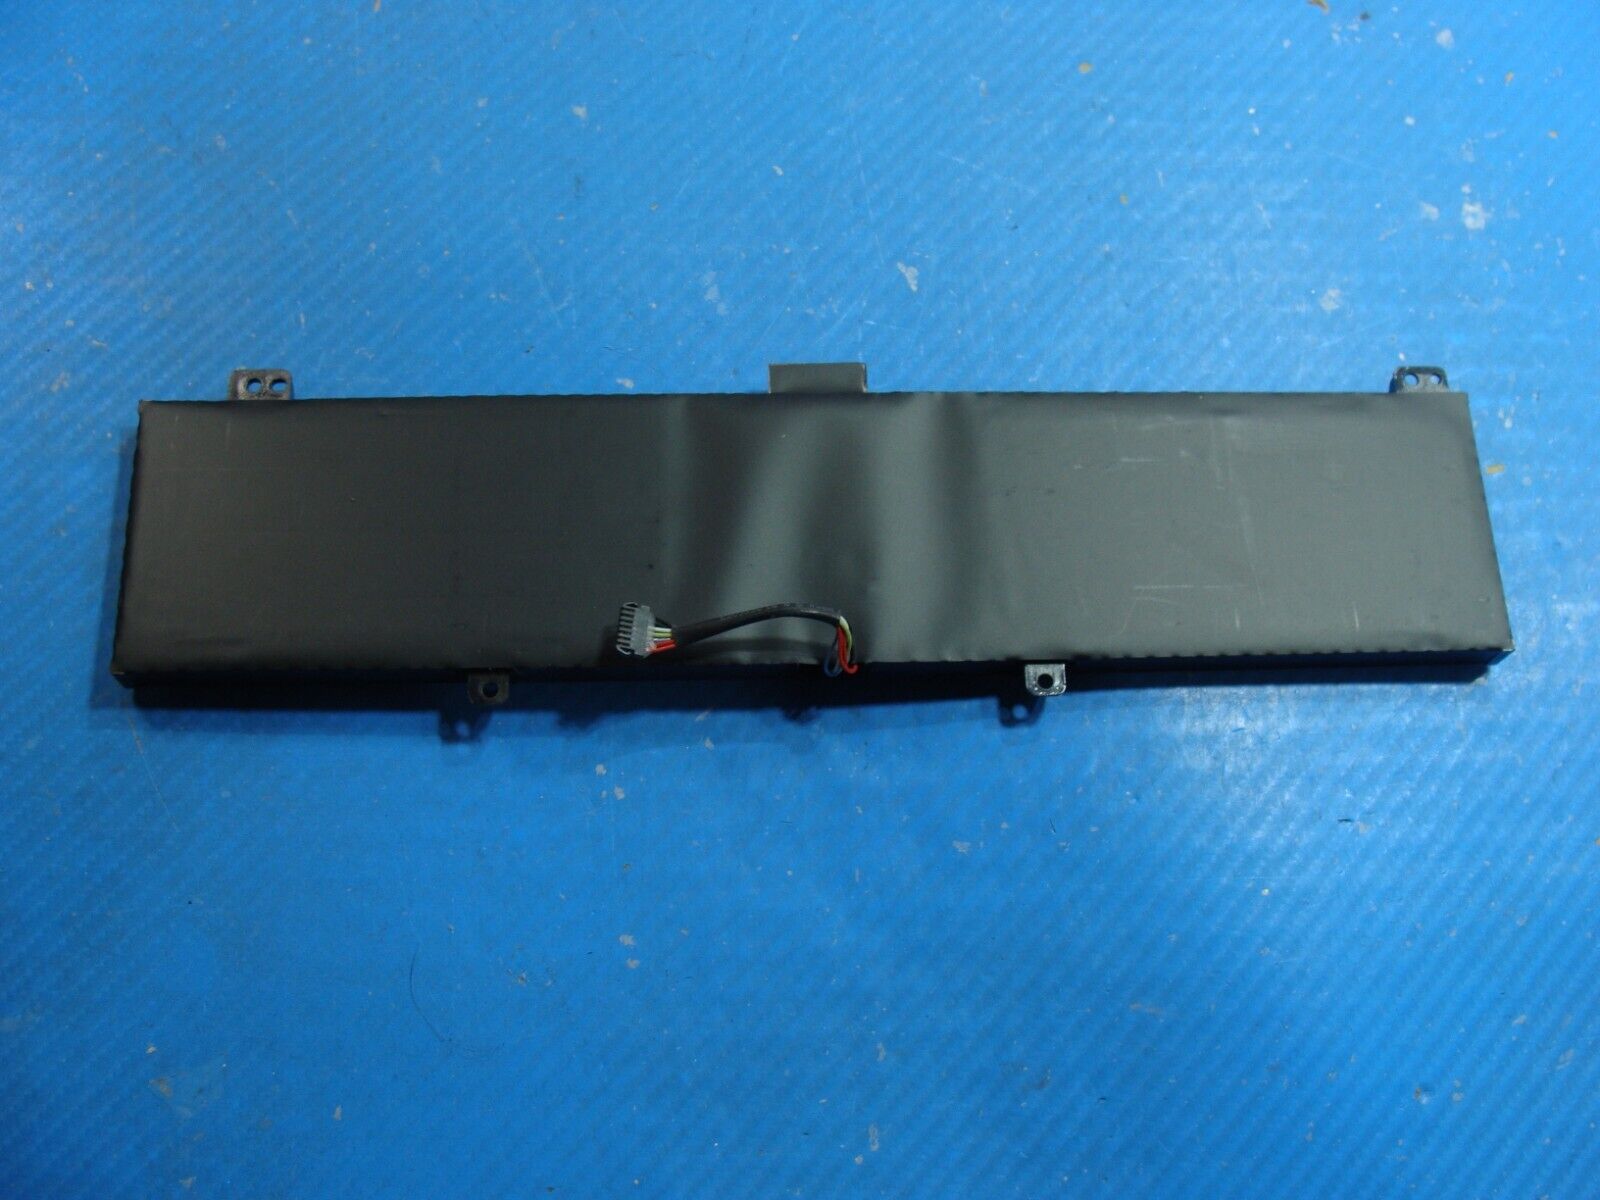 Lenovo IdeaPad 15.6” Y50-70 Laptop Battery 7.4V 54Wh 7400mAh L13M4P01 100%